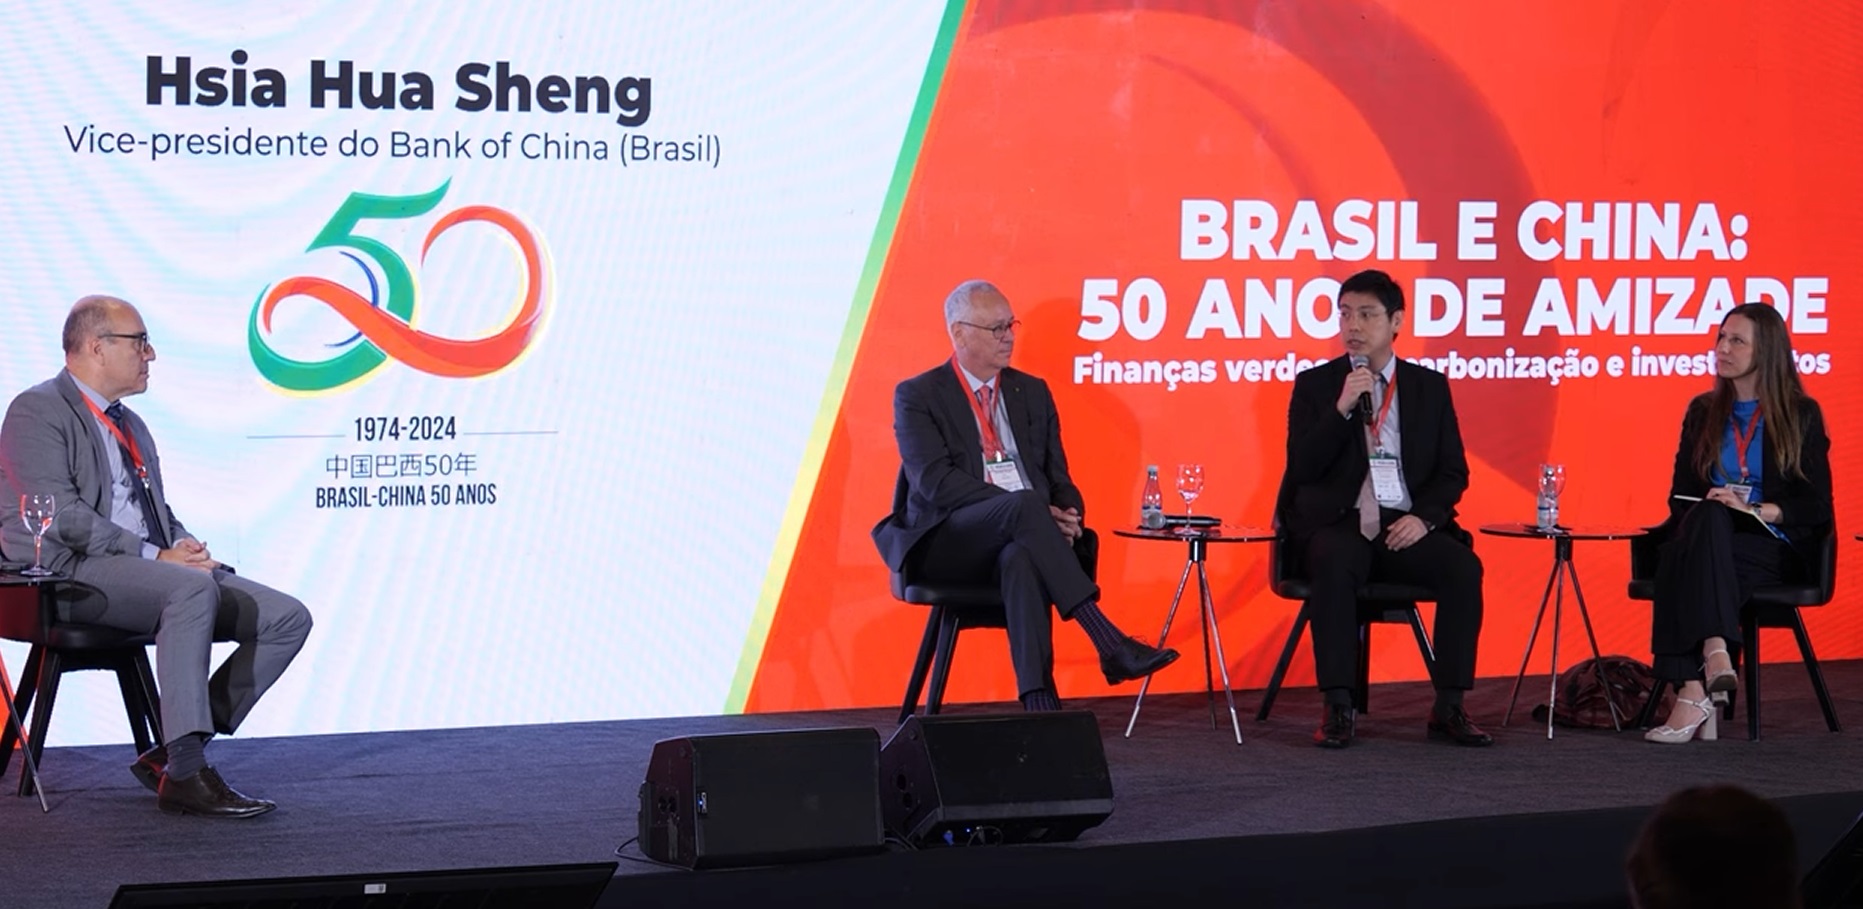 Vice-presidente do Bank of China Brasil, Hsia Hua Sheng